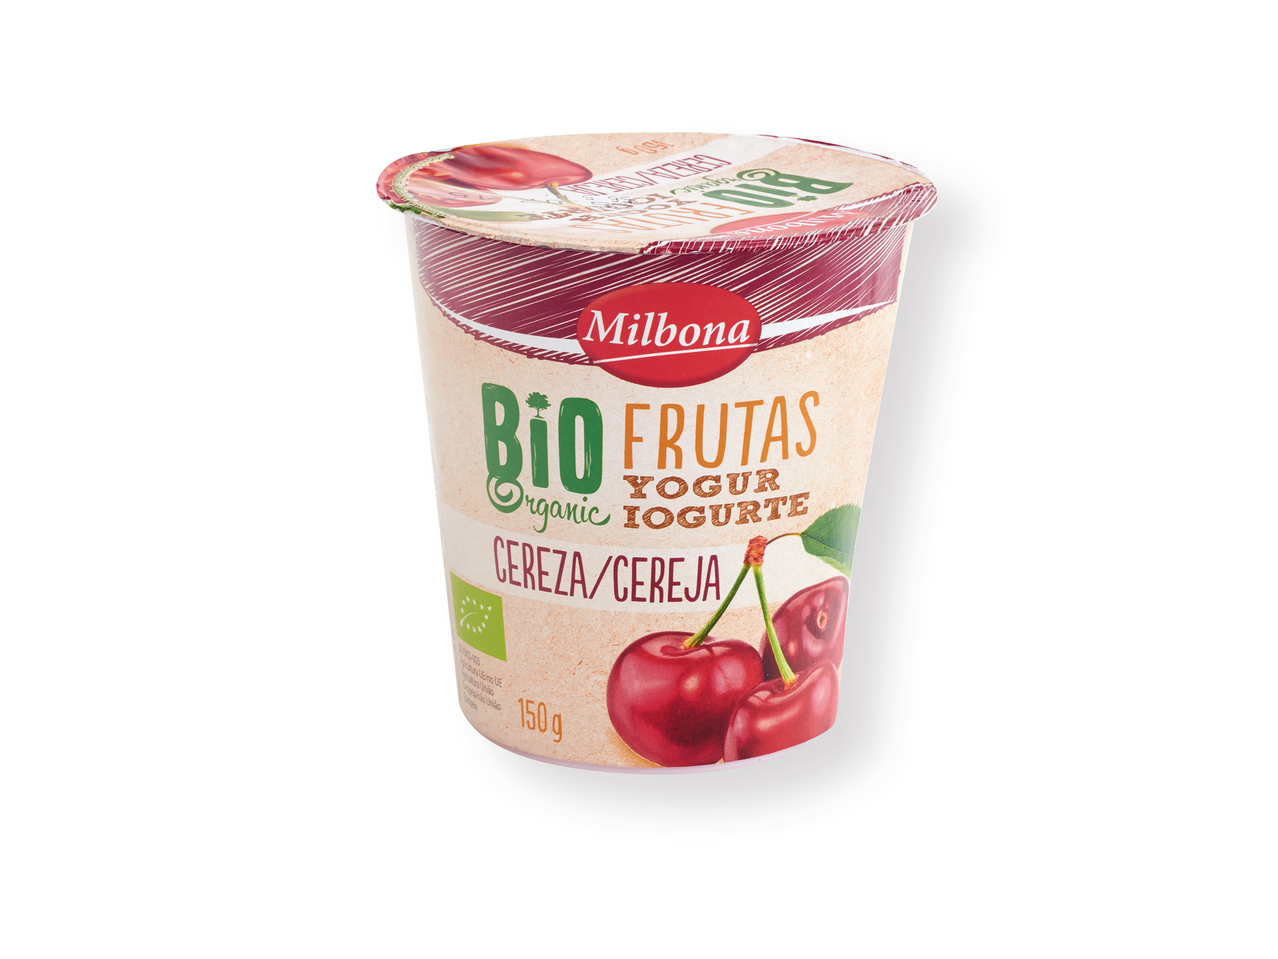 'Milbona(R)' Yogur de frutas ecológico